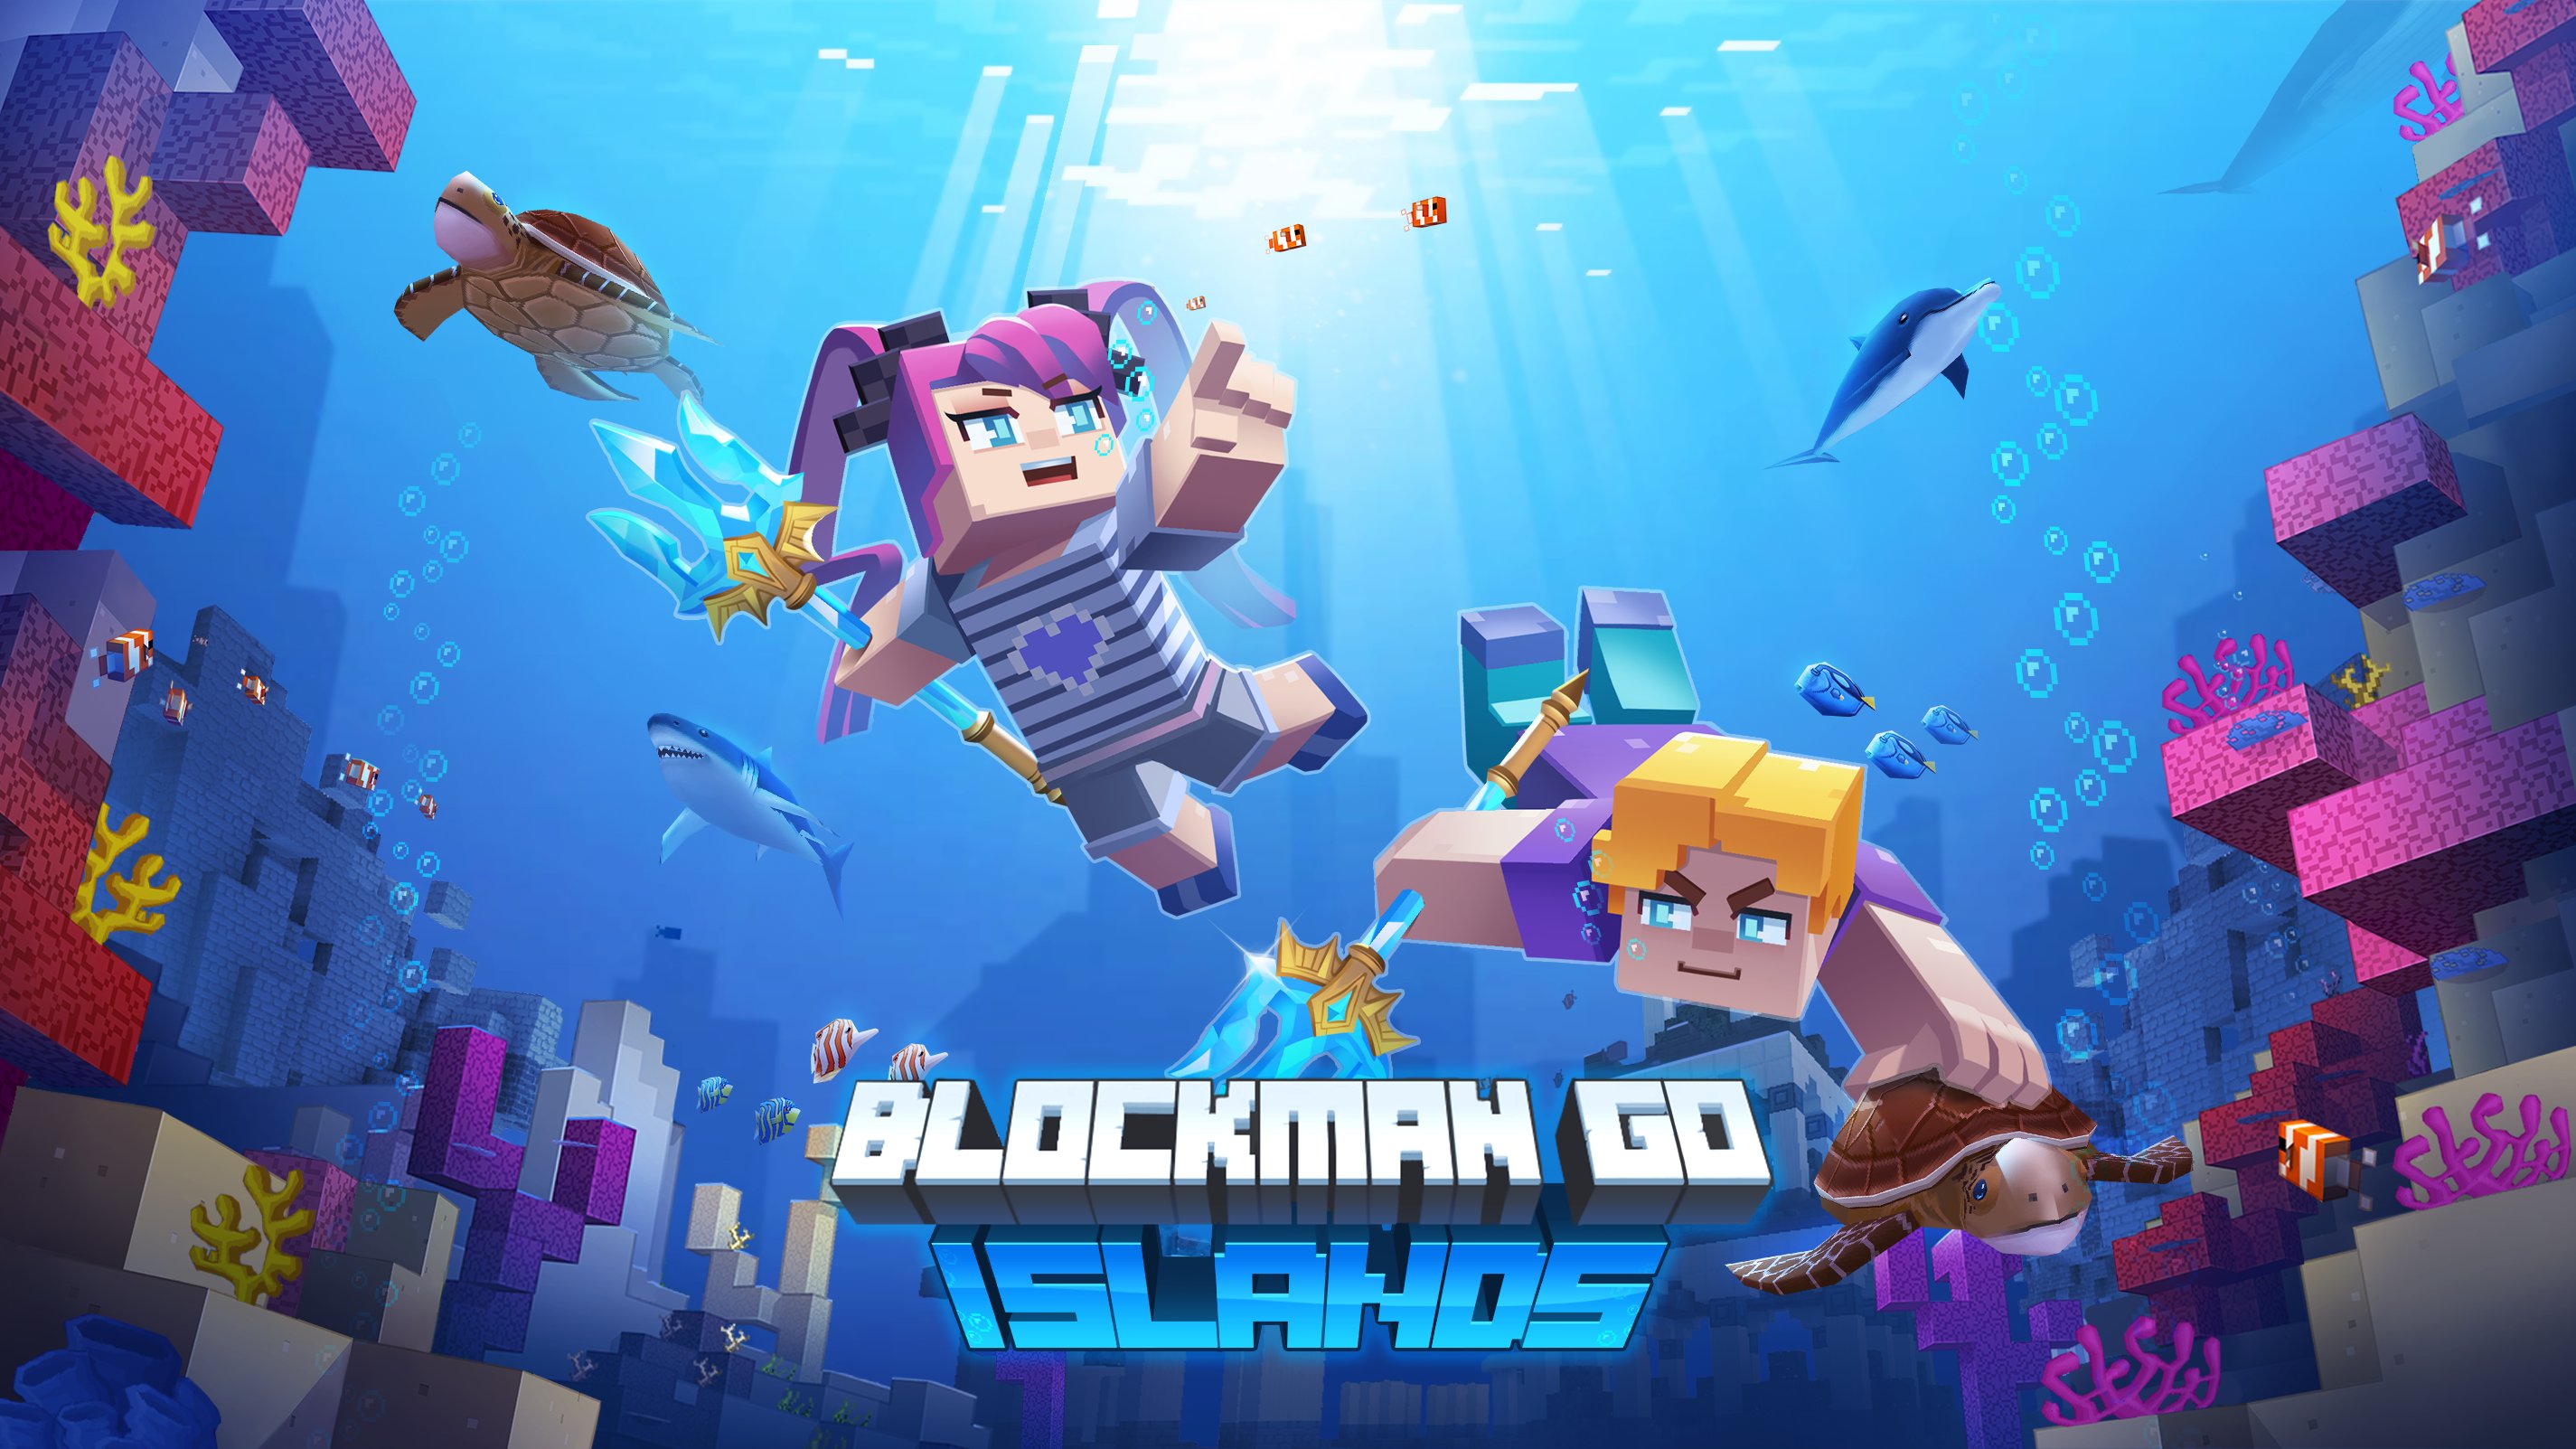 Go blockman Blockman GO